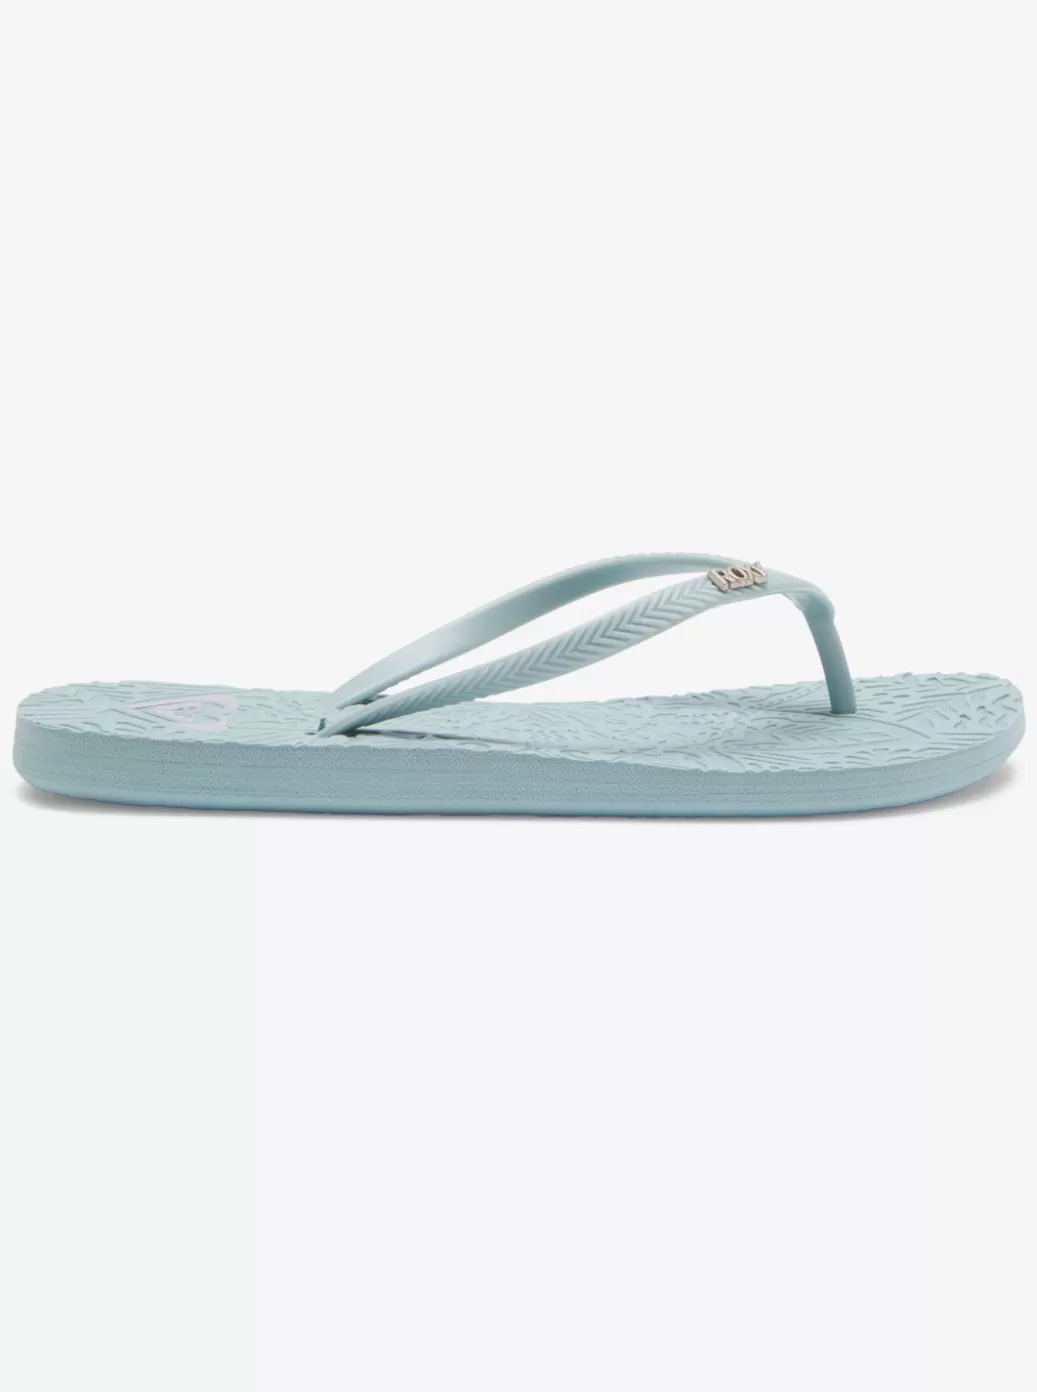 Flip Flops | WOMEN ROXY Antilles Flip Flops Blue Surf